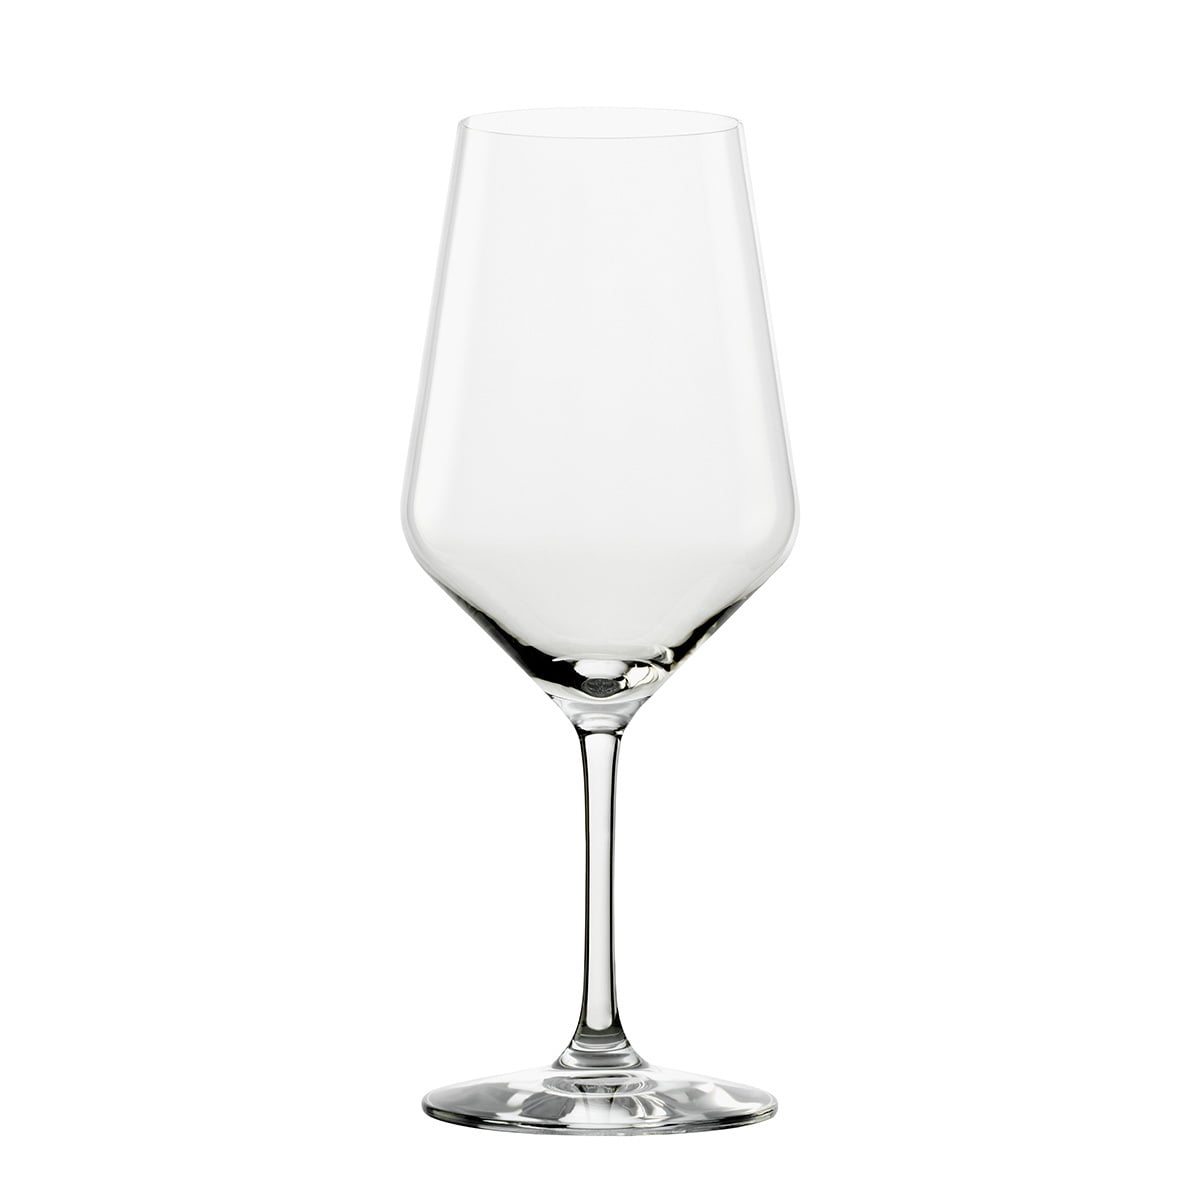 Stolzle Lausitz Fino, Wine glasses on